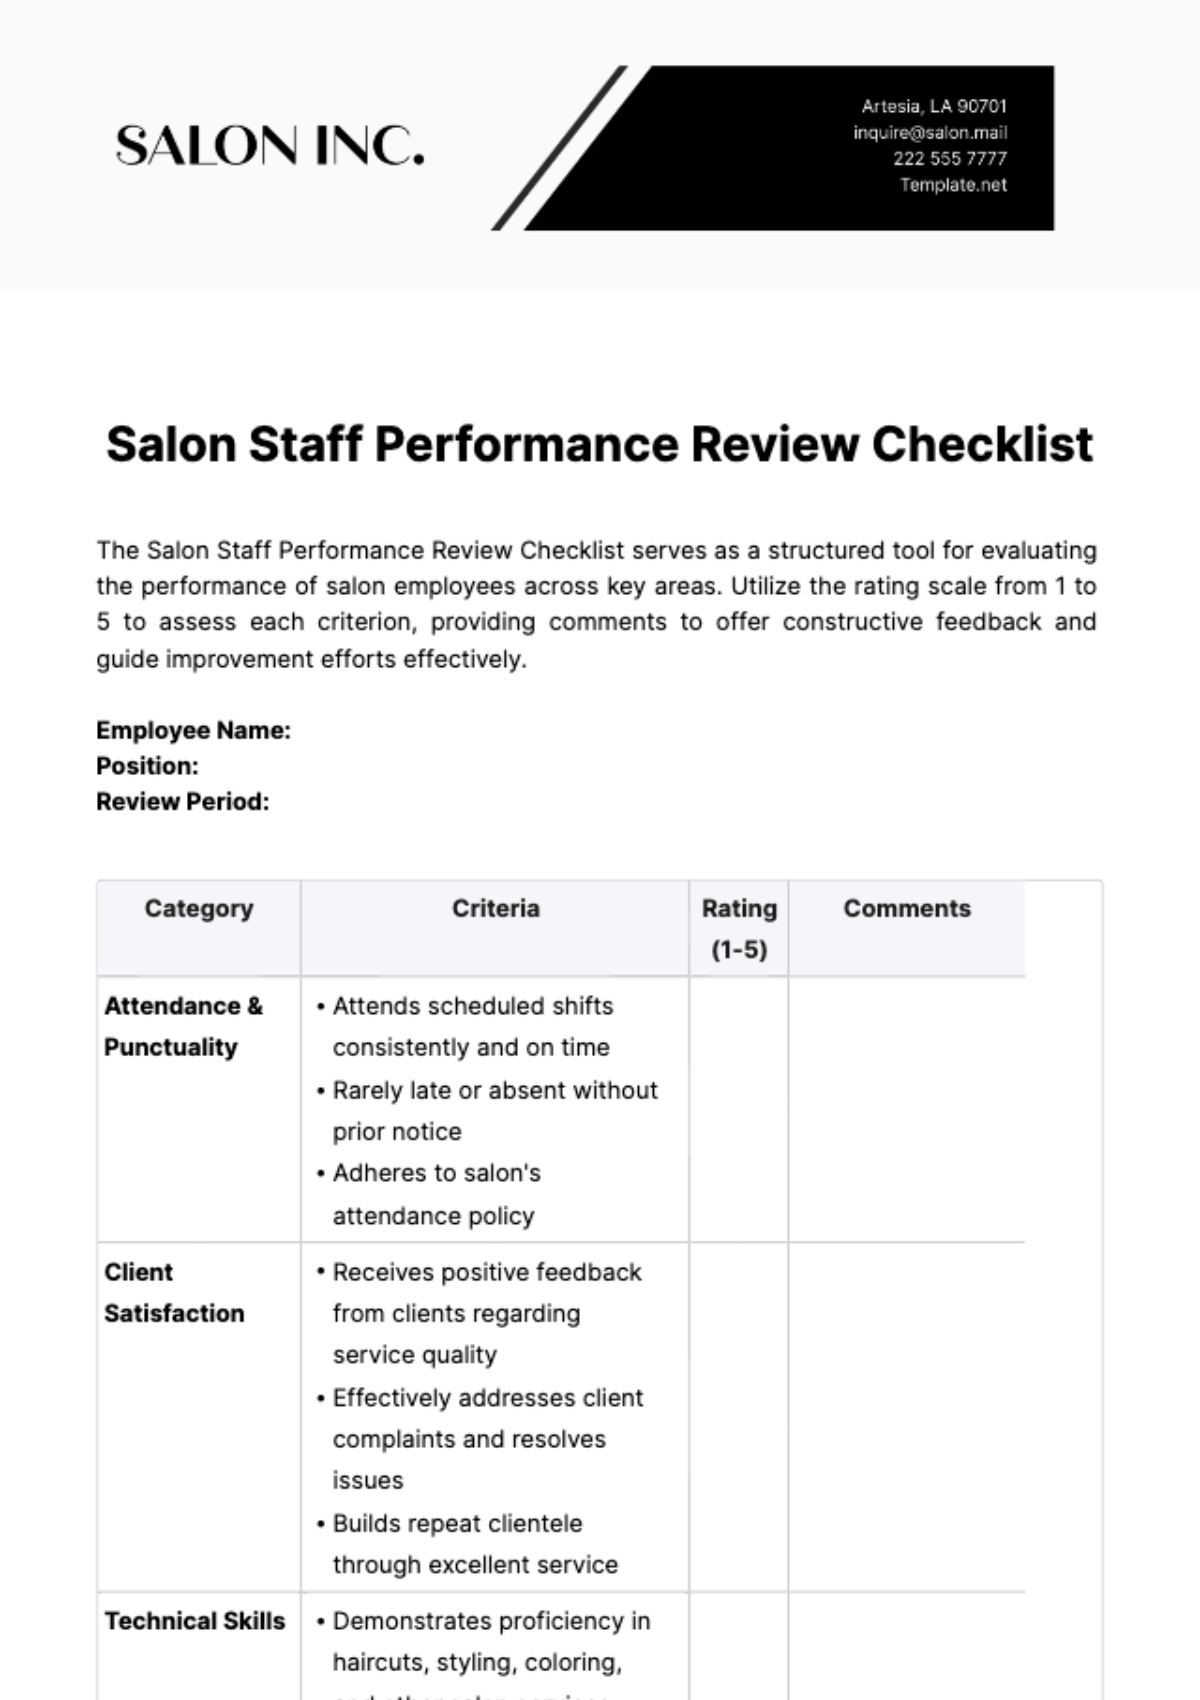 Free Salon Staff Performance Review Checklist Template